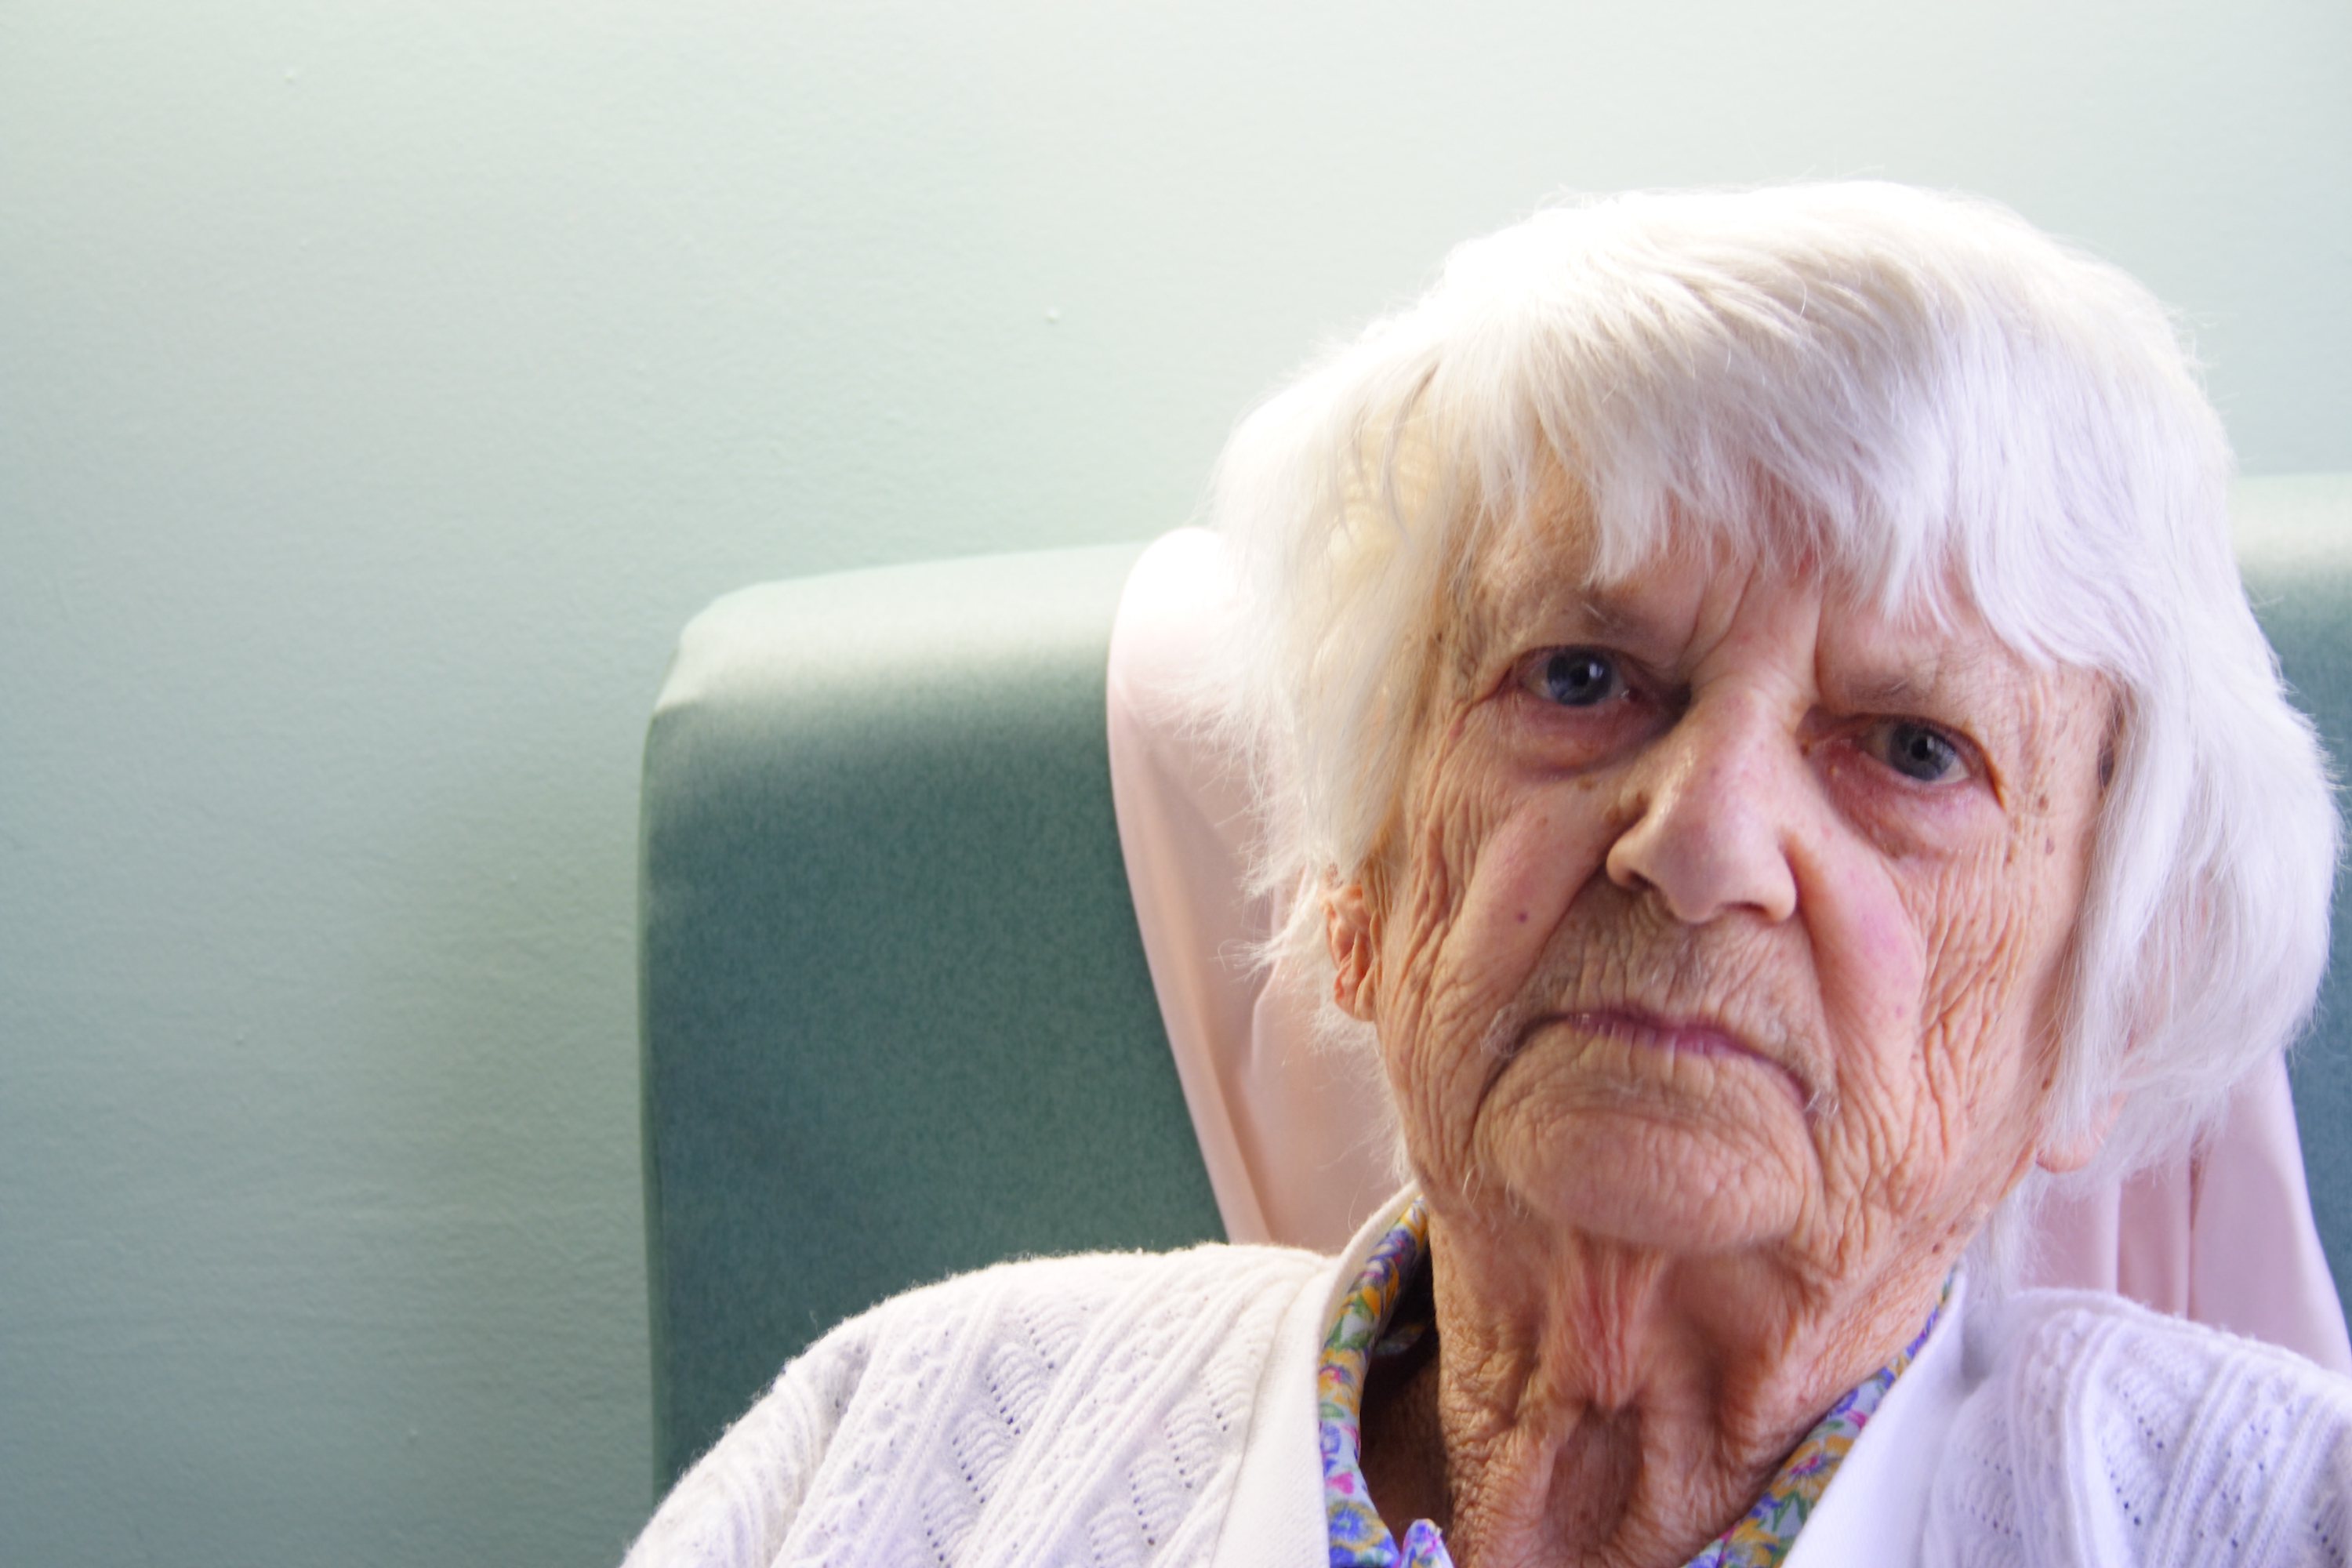 A serious-looking elderly woman | Source: Shutterstock